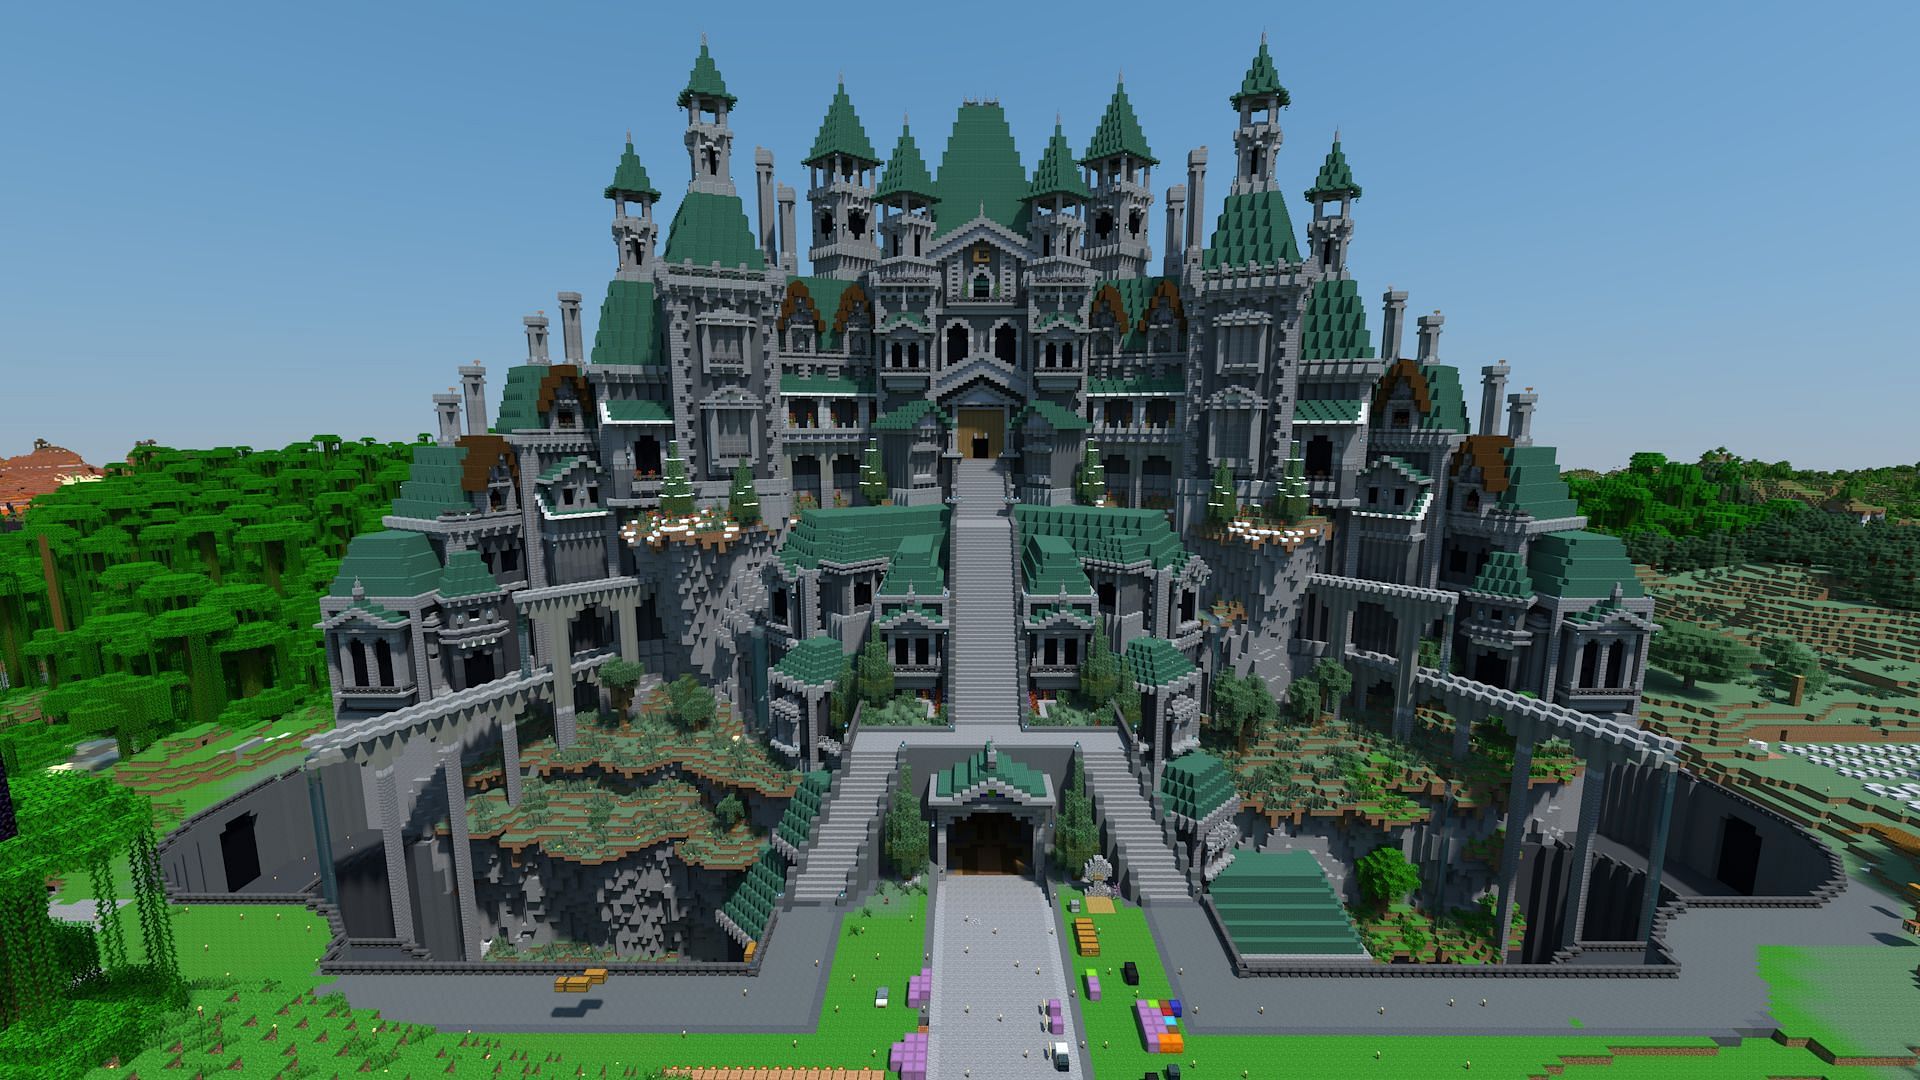 Hermitcraft has seen many impressive builds (Image via Reddit user u/andybno1)